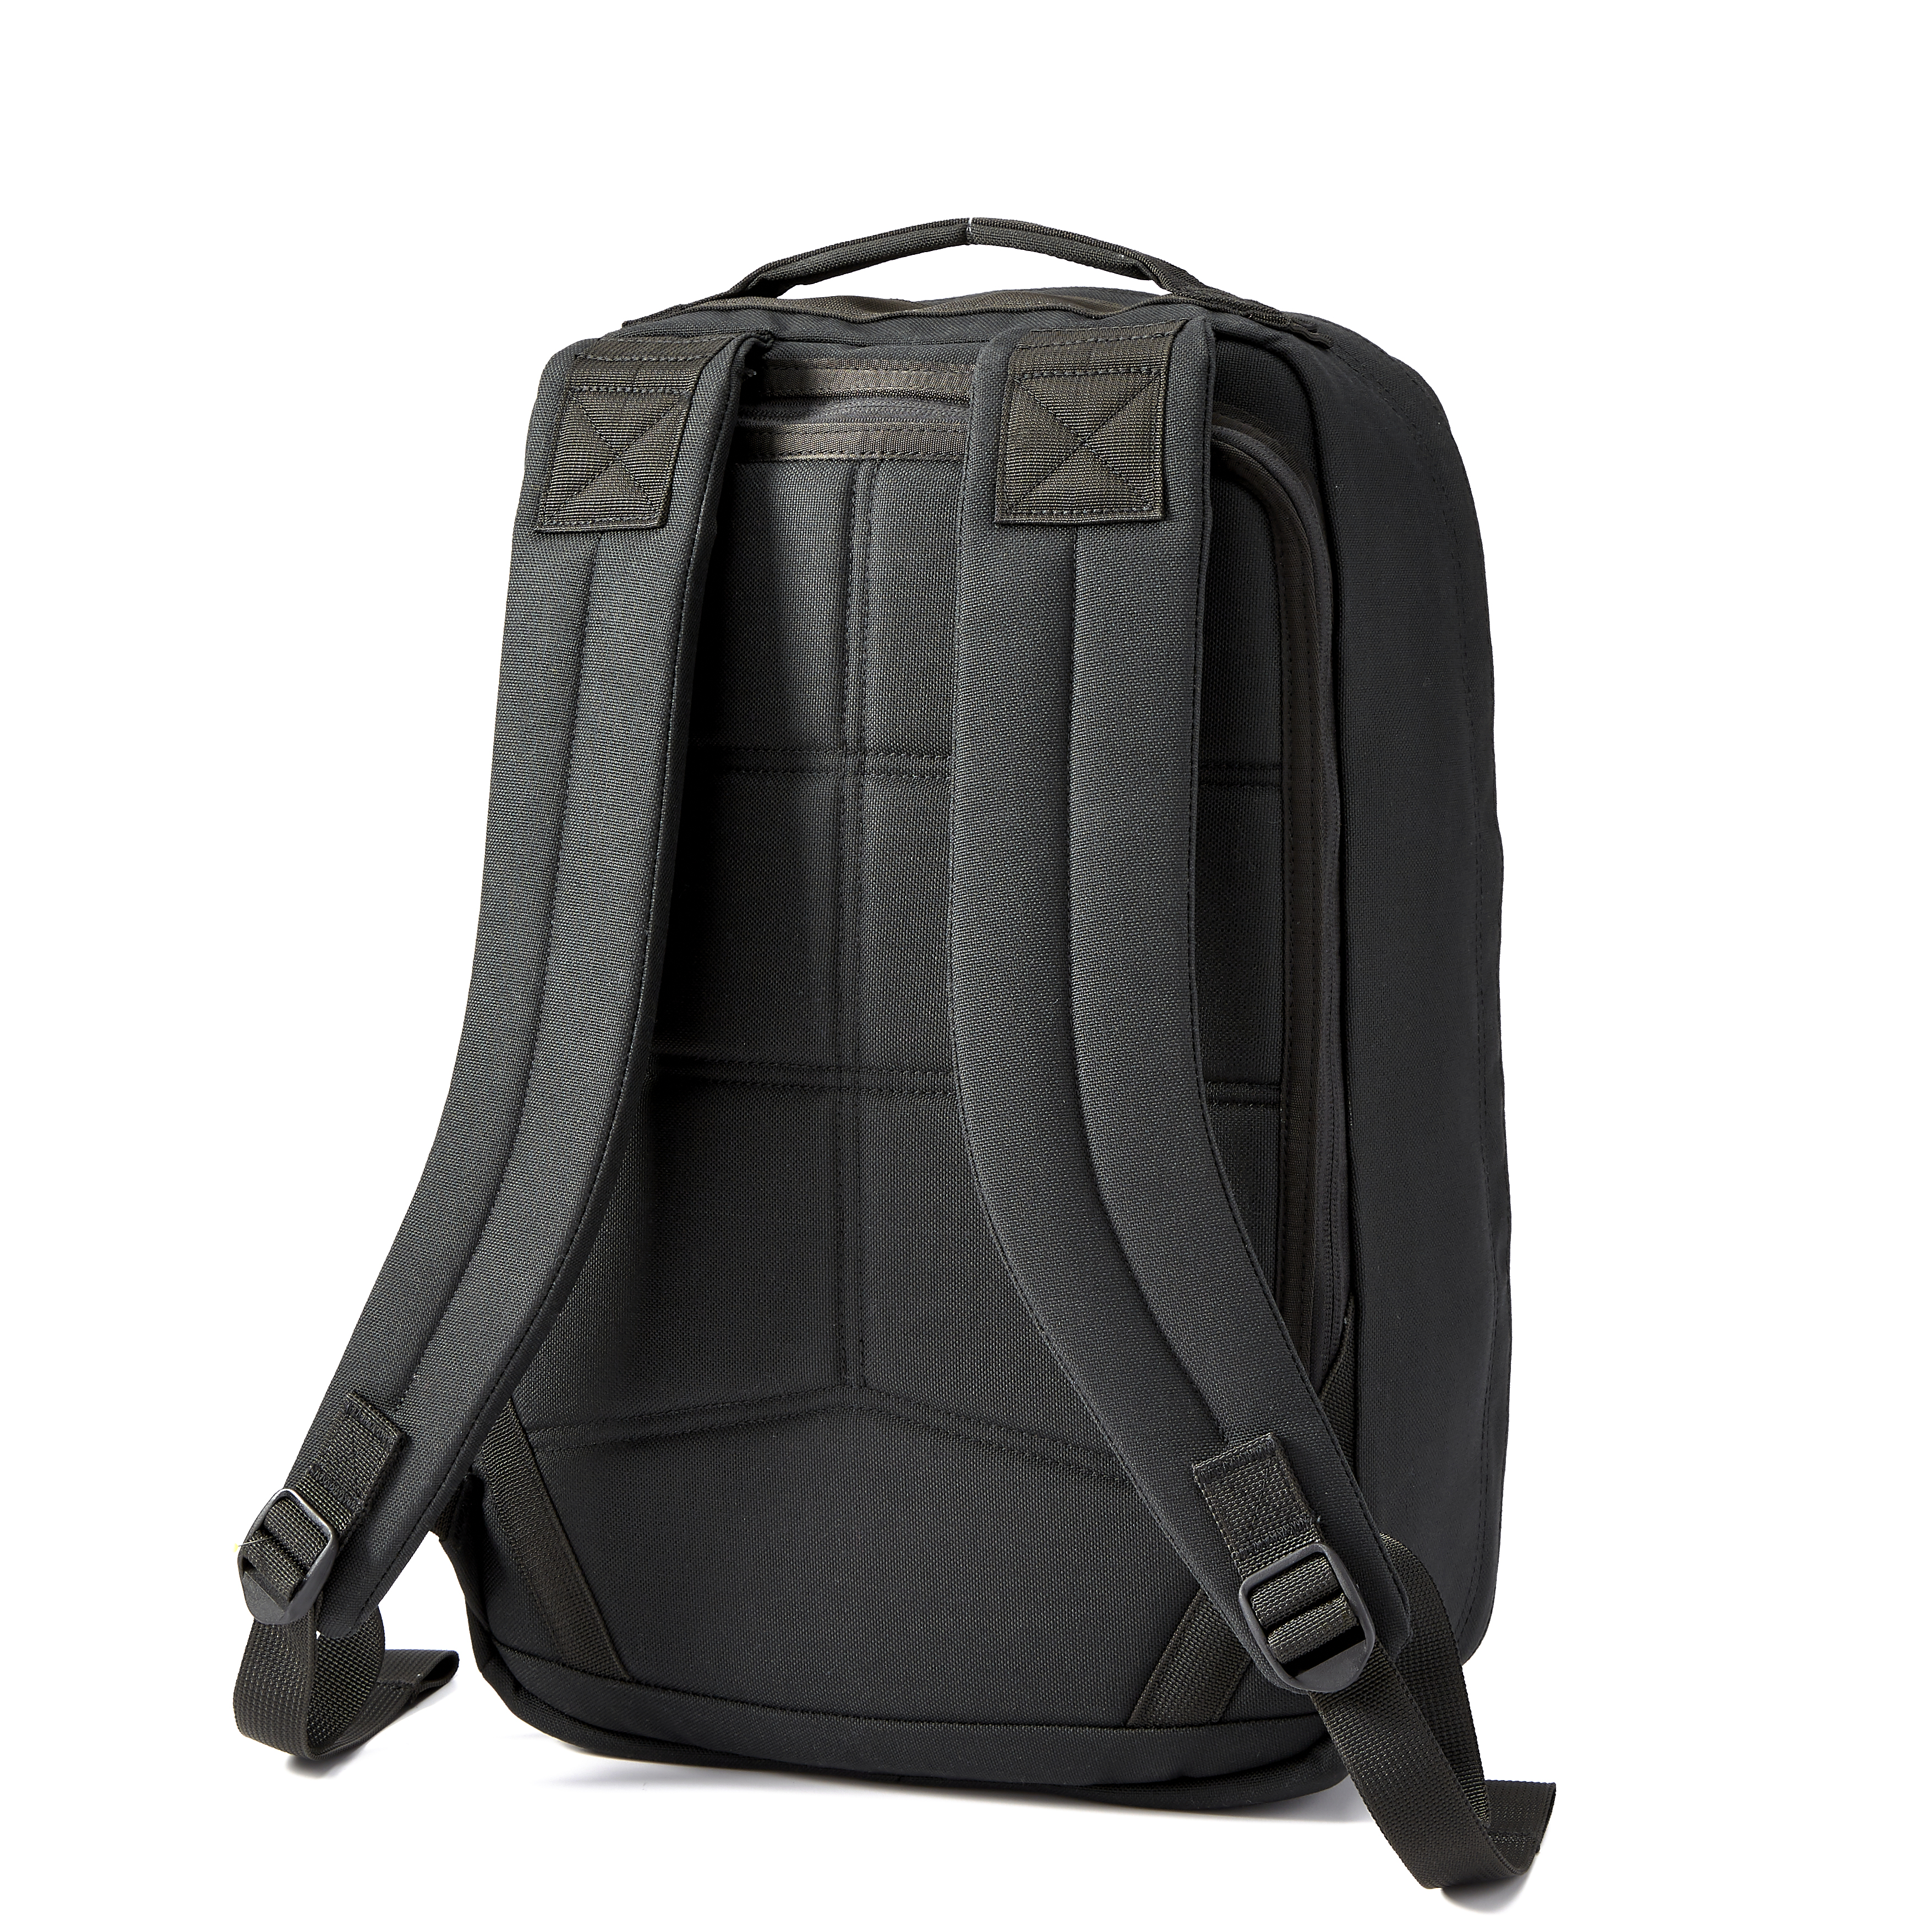 Huckberry X GORUCK GR1 Slick Backpack - 26L